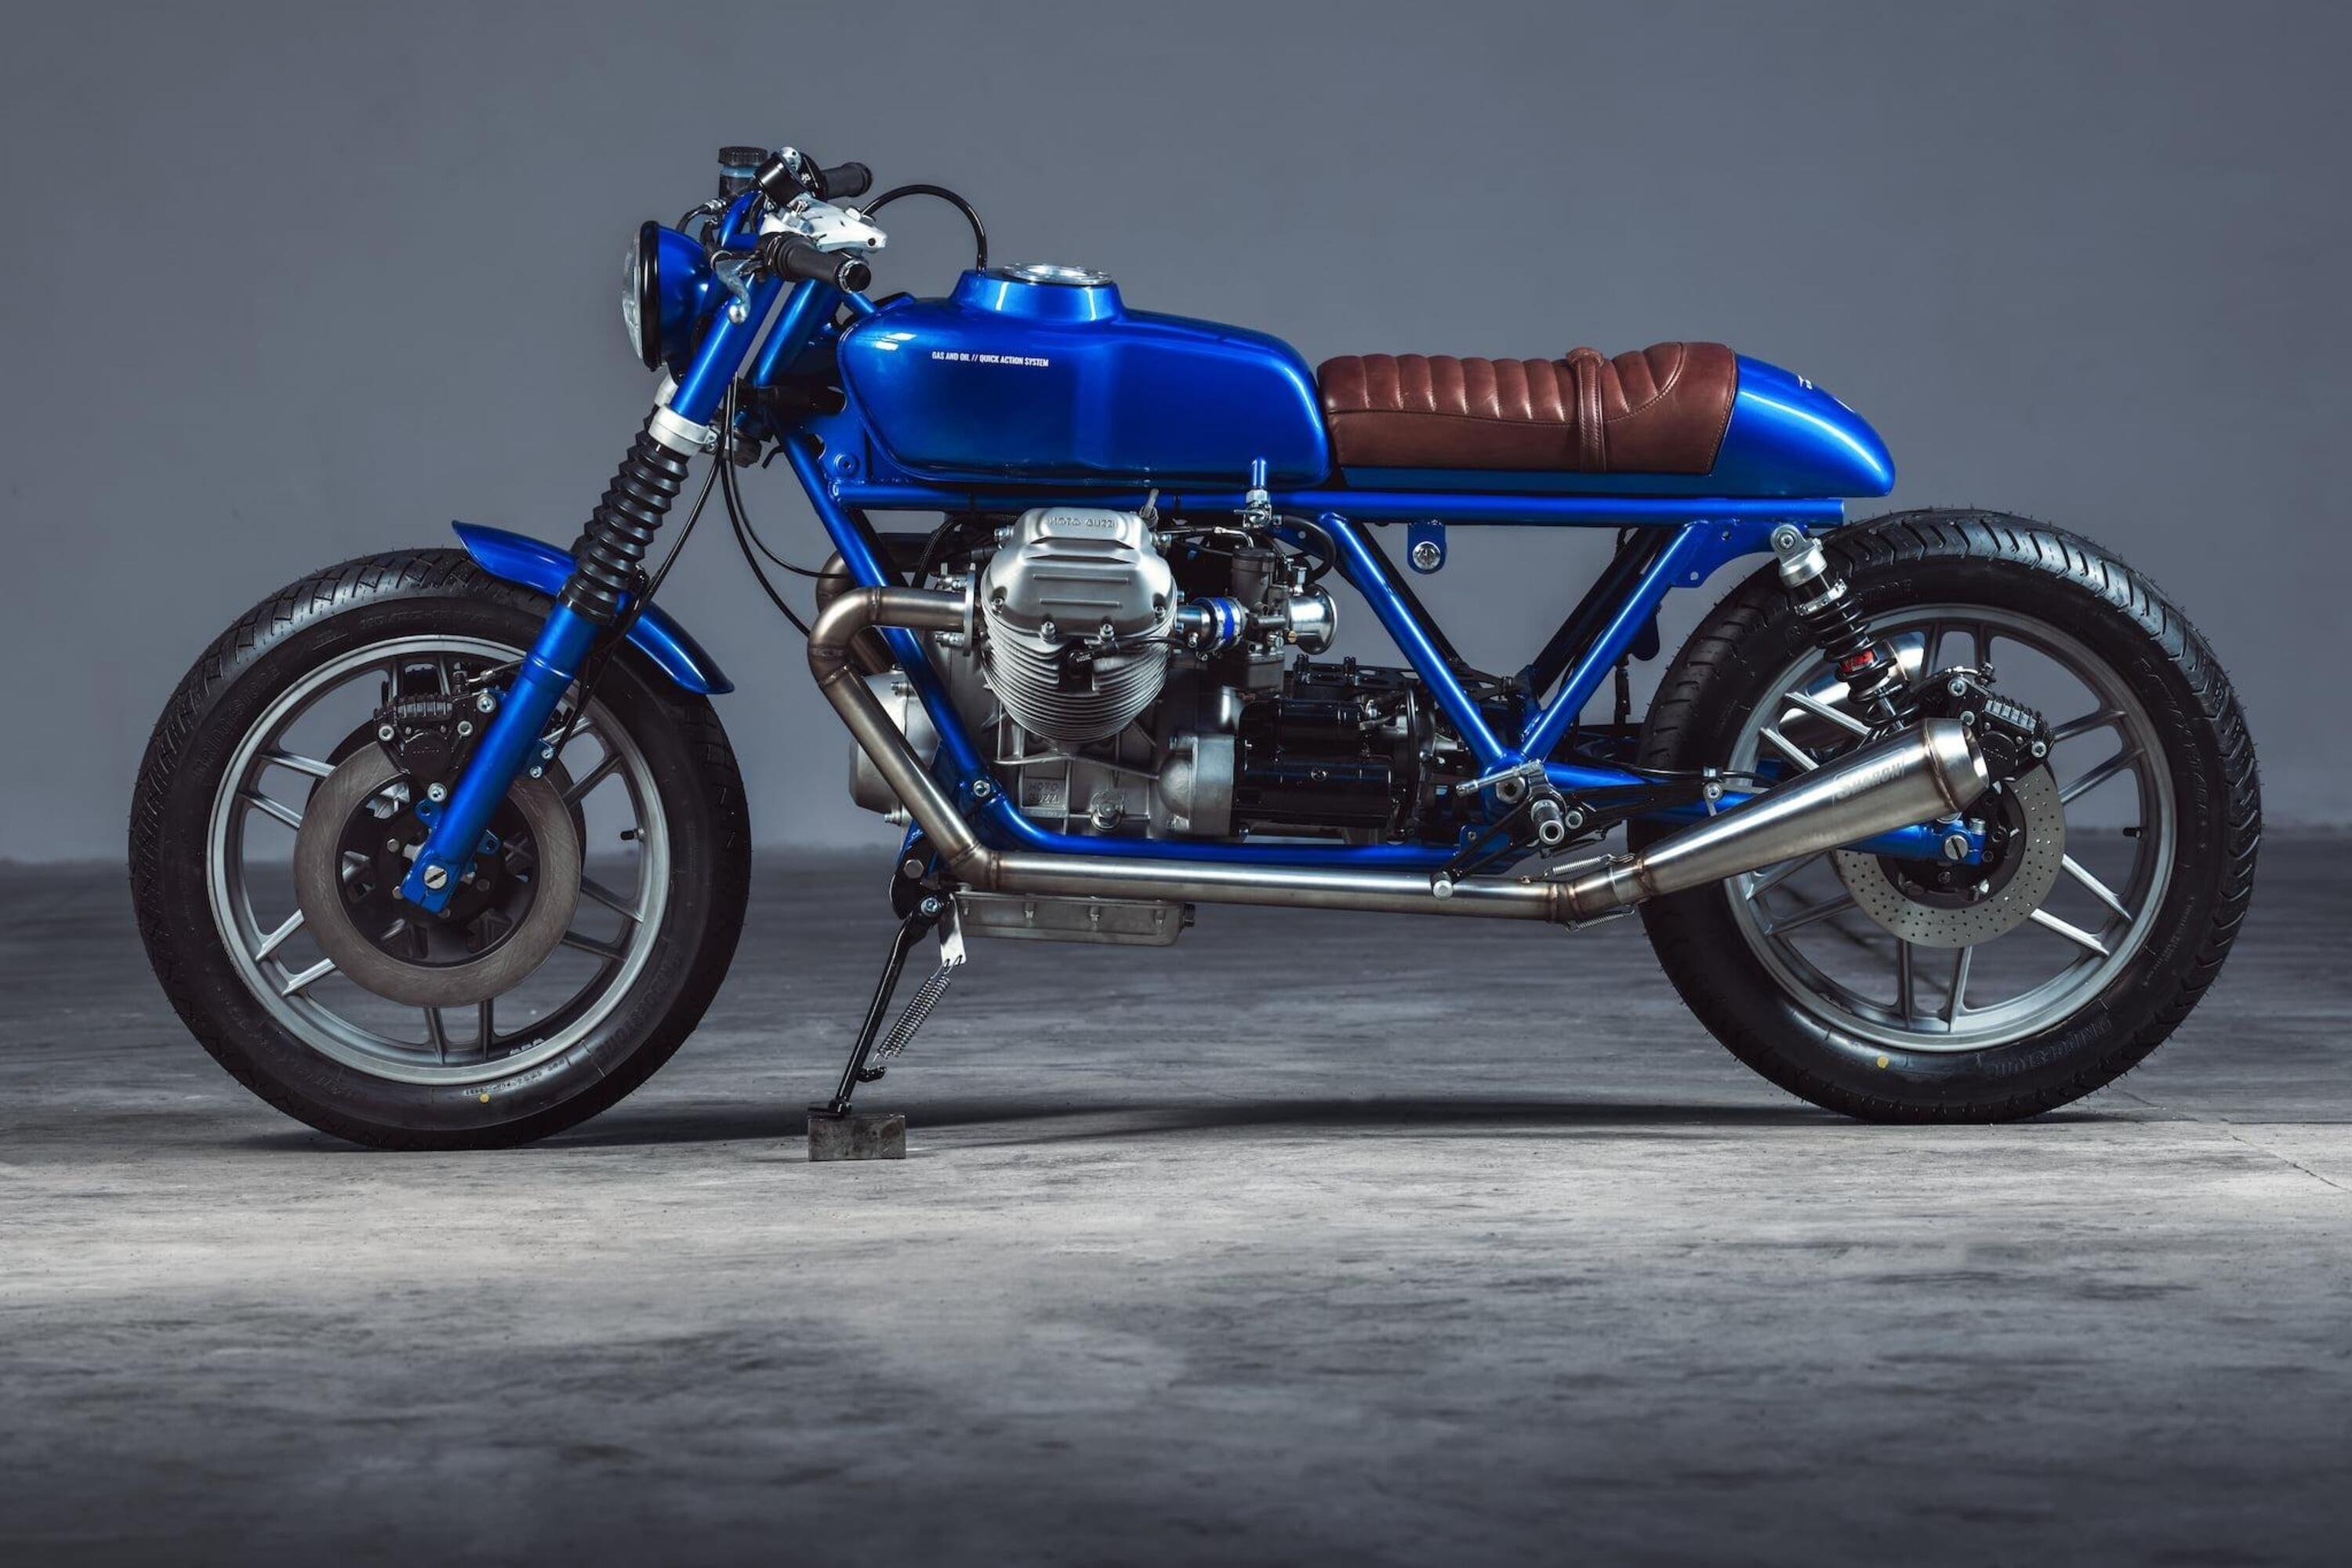 La Moto Guzzi All Blue di Gas and Oil Bespoke Motorcycles